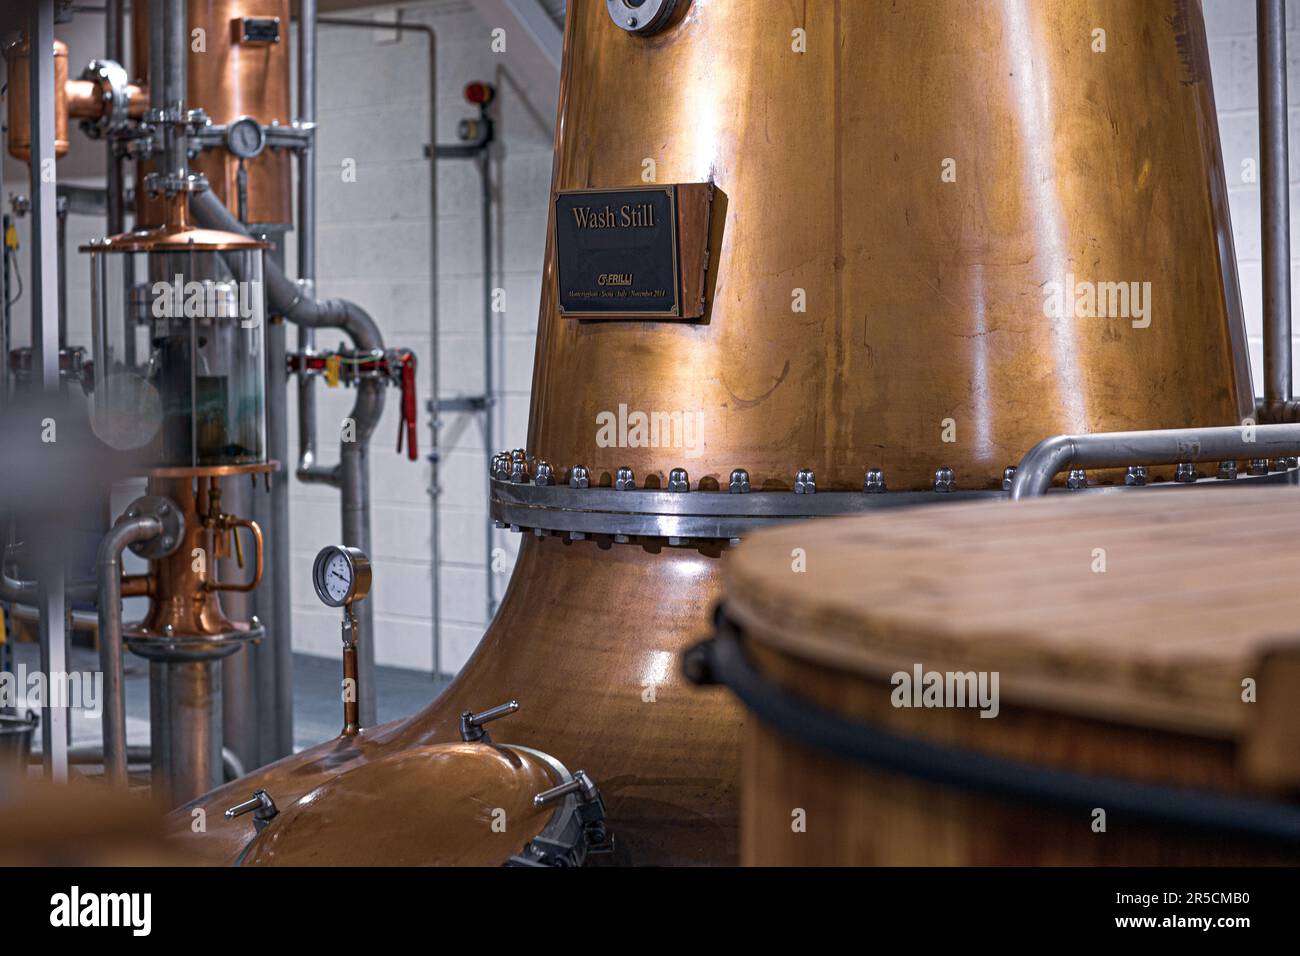 Isle of Harris Distillery in Tarbert Isle of Harris, Outer Hebrides, Scotland, Stock Photo